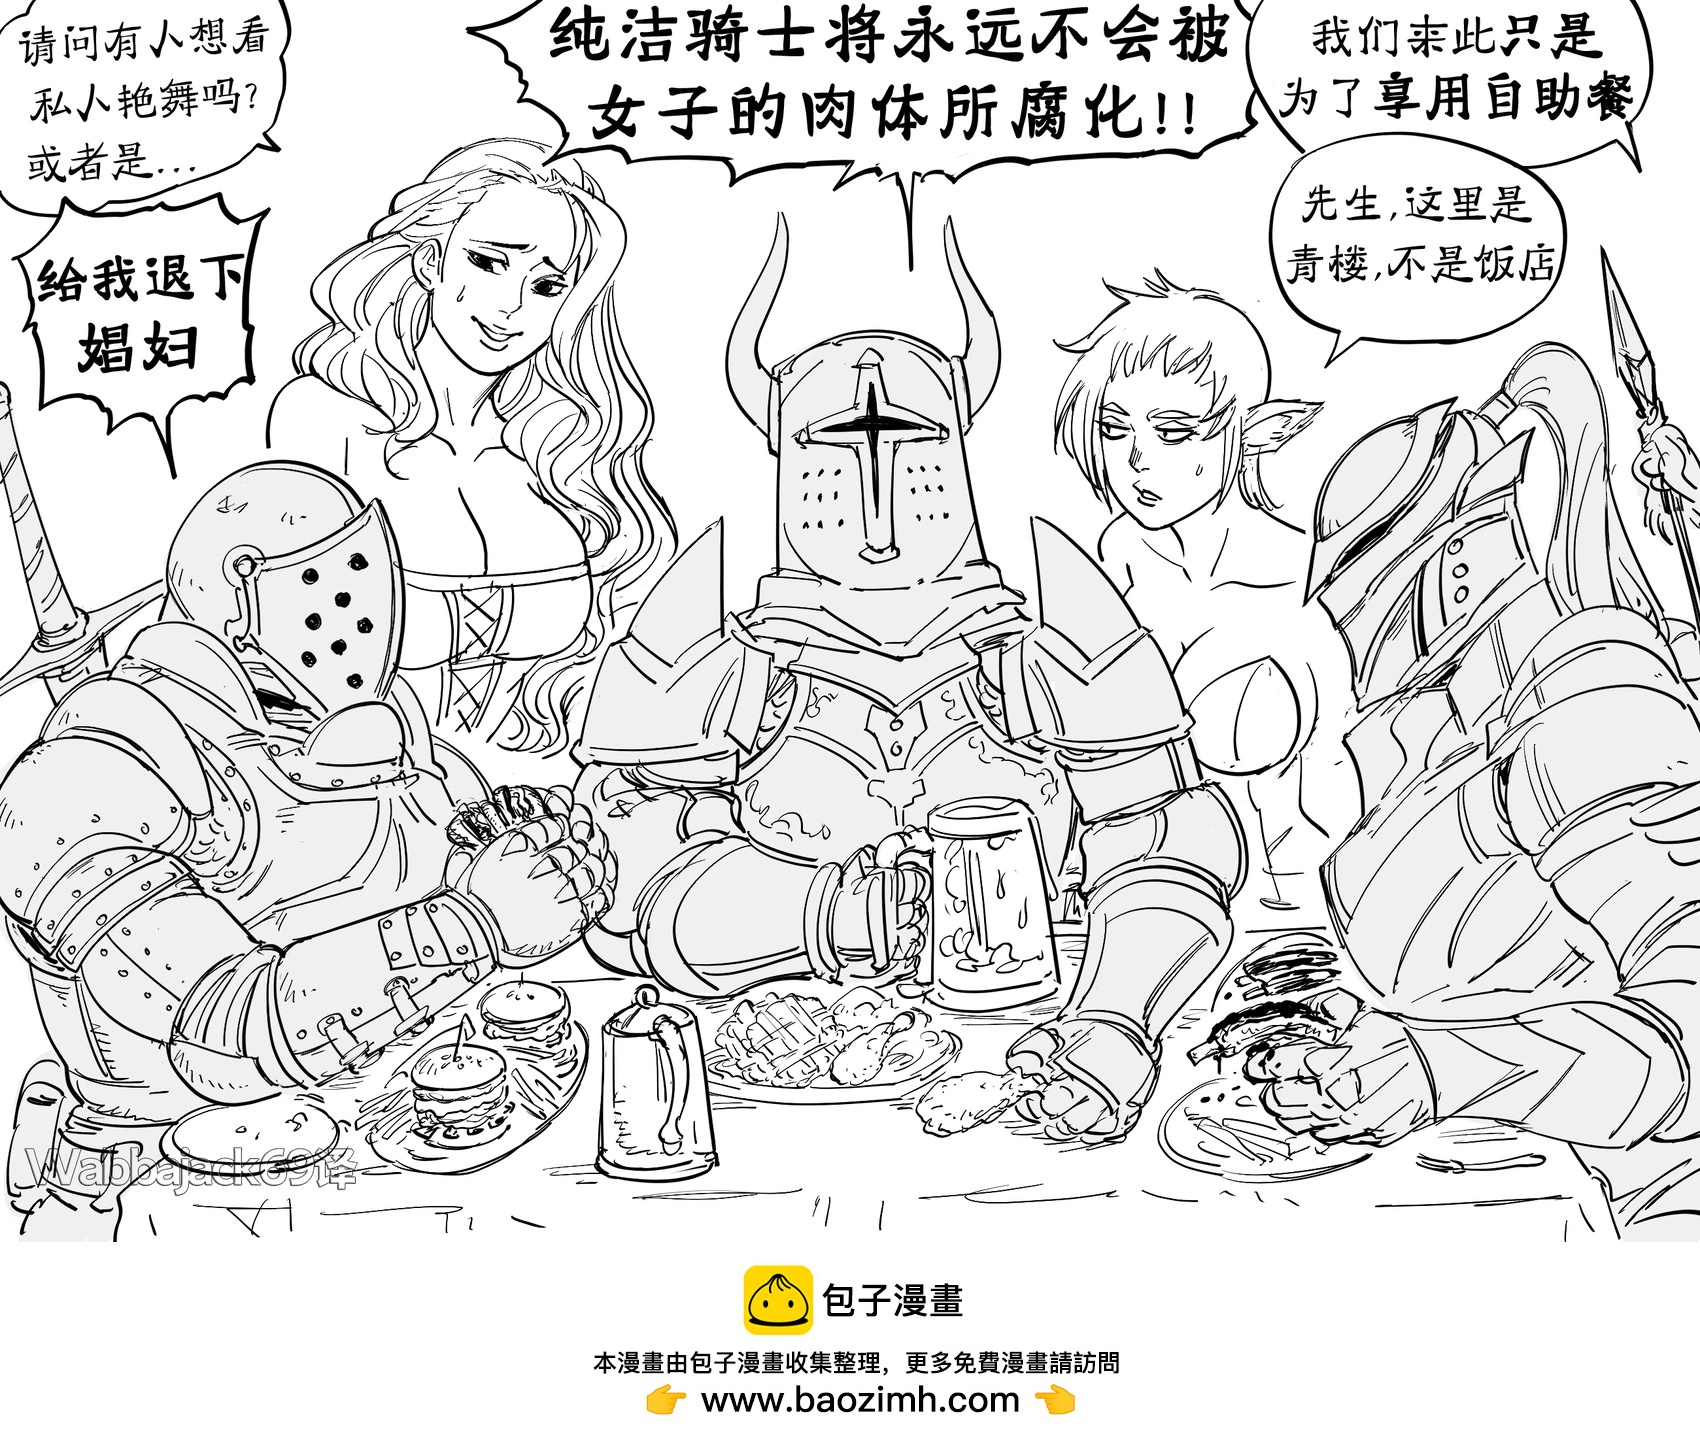 Baalbuddy漫畫小短篇 - 純潔騎士在一個'不尋常'的地方聚餐 - 1